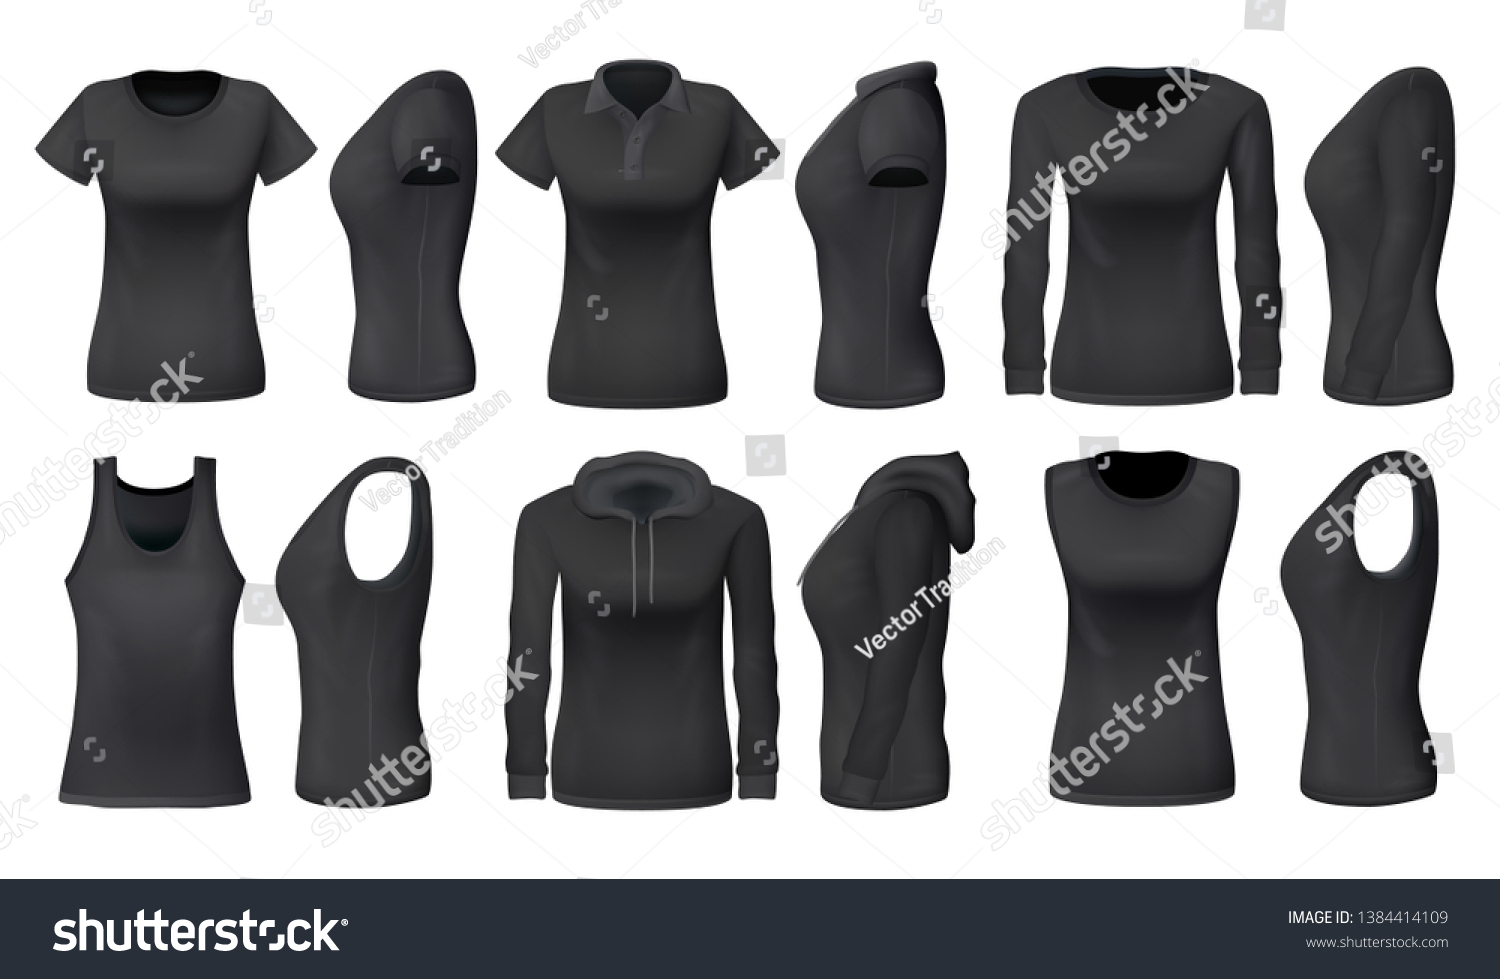 Download Women Clothes Sportswear Apparel Mockups Tshirts Stock Vector Royalty Free 1384414109 PSD Mockup Templates